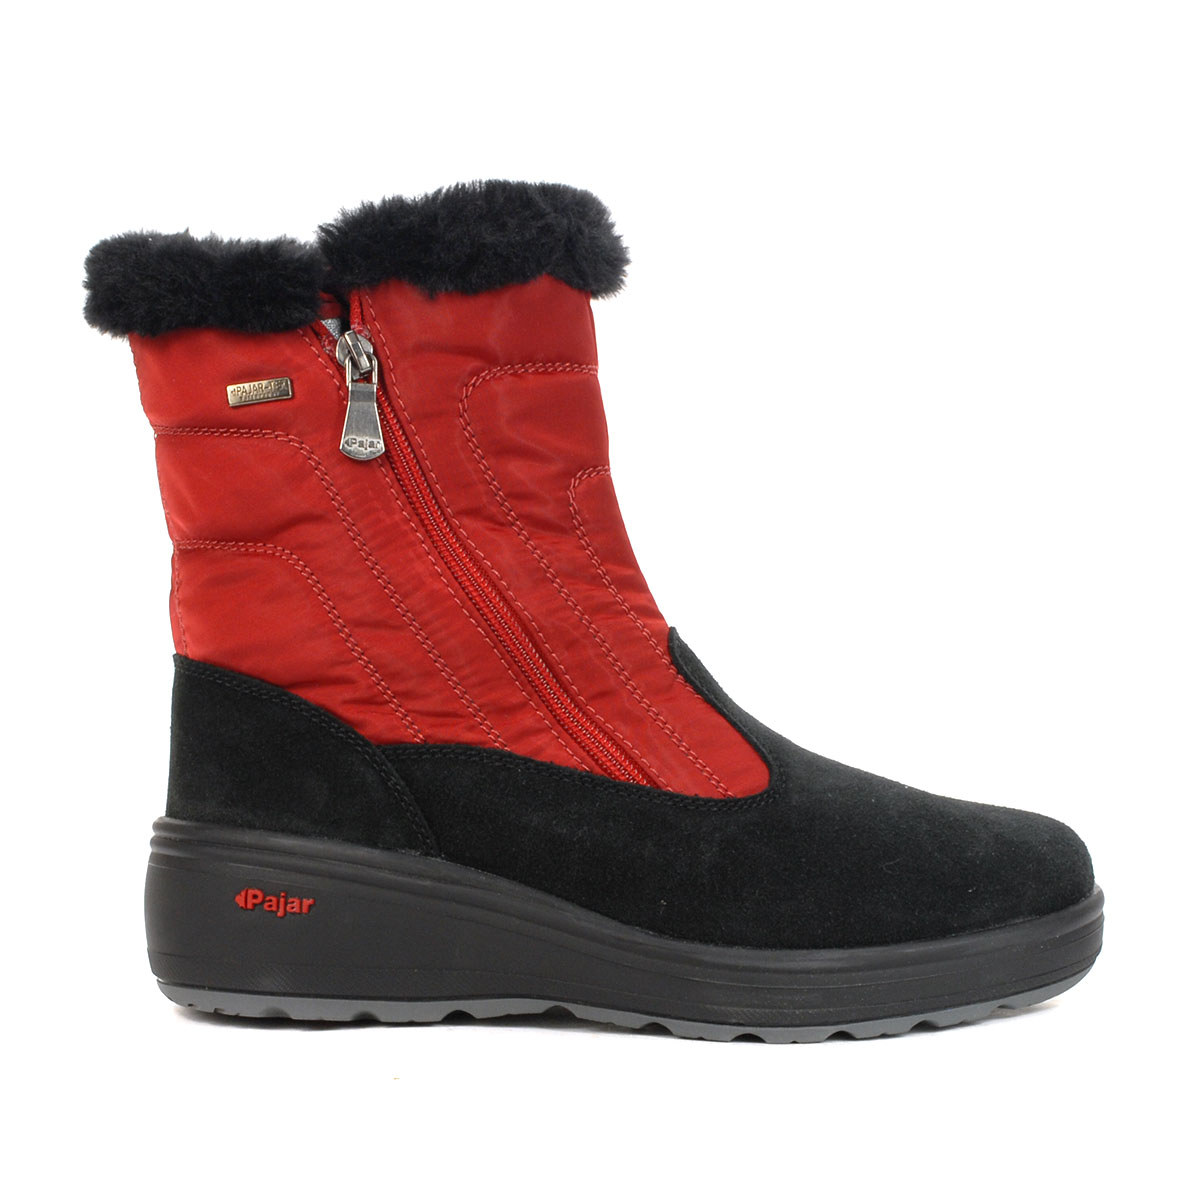 Pajar Women's Ice Gripper Winter Boots Black EUR 41 –, 44% OFF